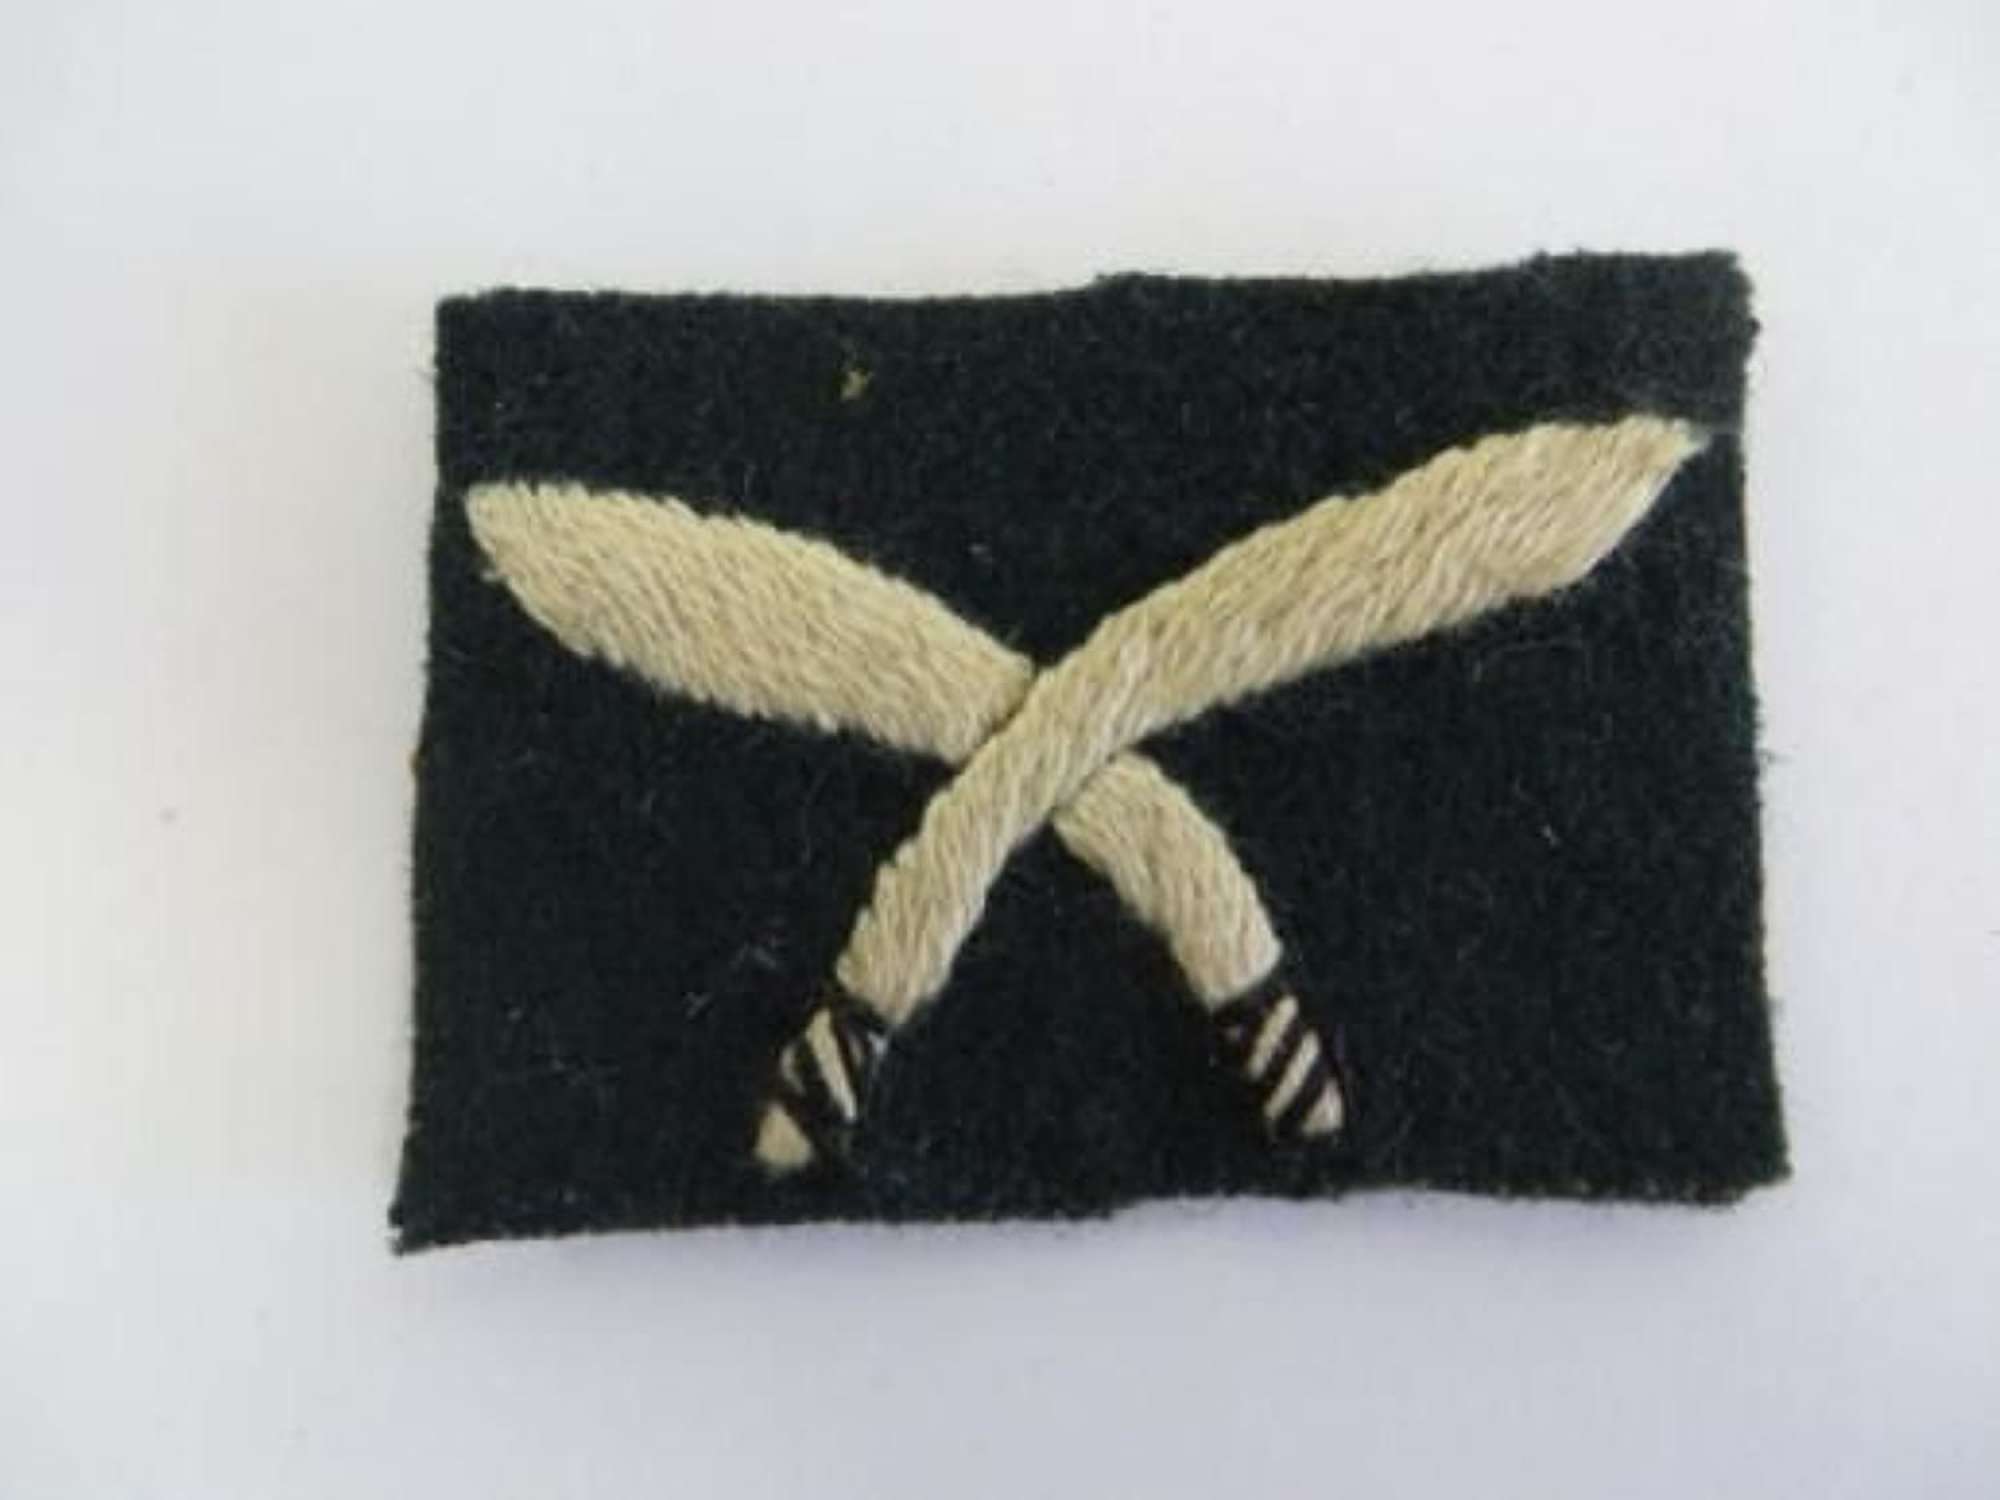 17th Gurkha Infantry Division Formation Badge